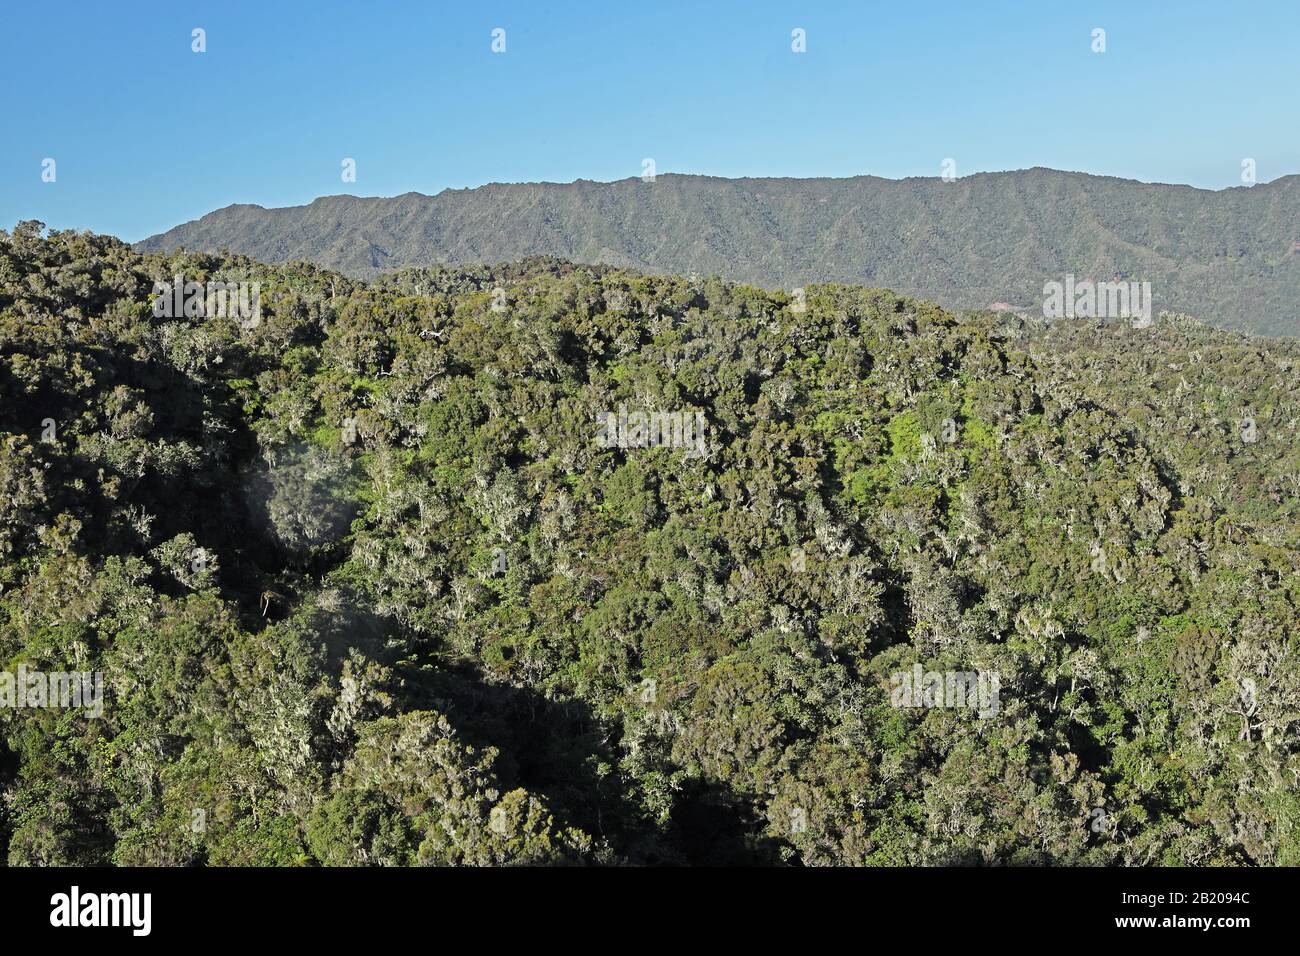 Blick über die üppigen bewaldeten Berge Reserve Naturelle de la Roche Ecrit, Insel Réunion, Indischer Ozean Dezember Stockfoto